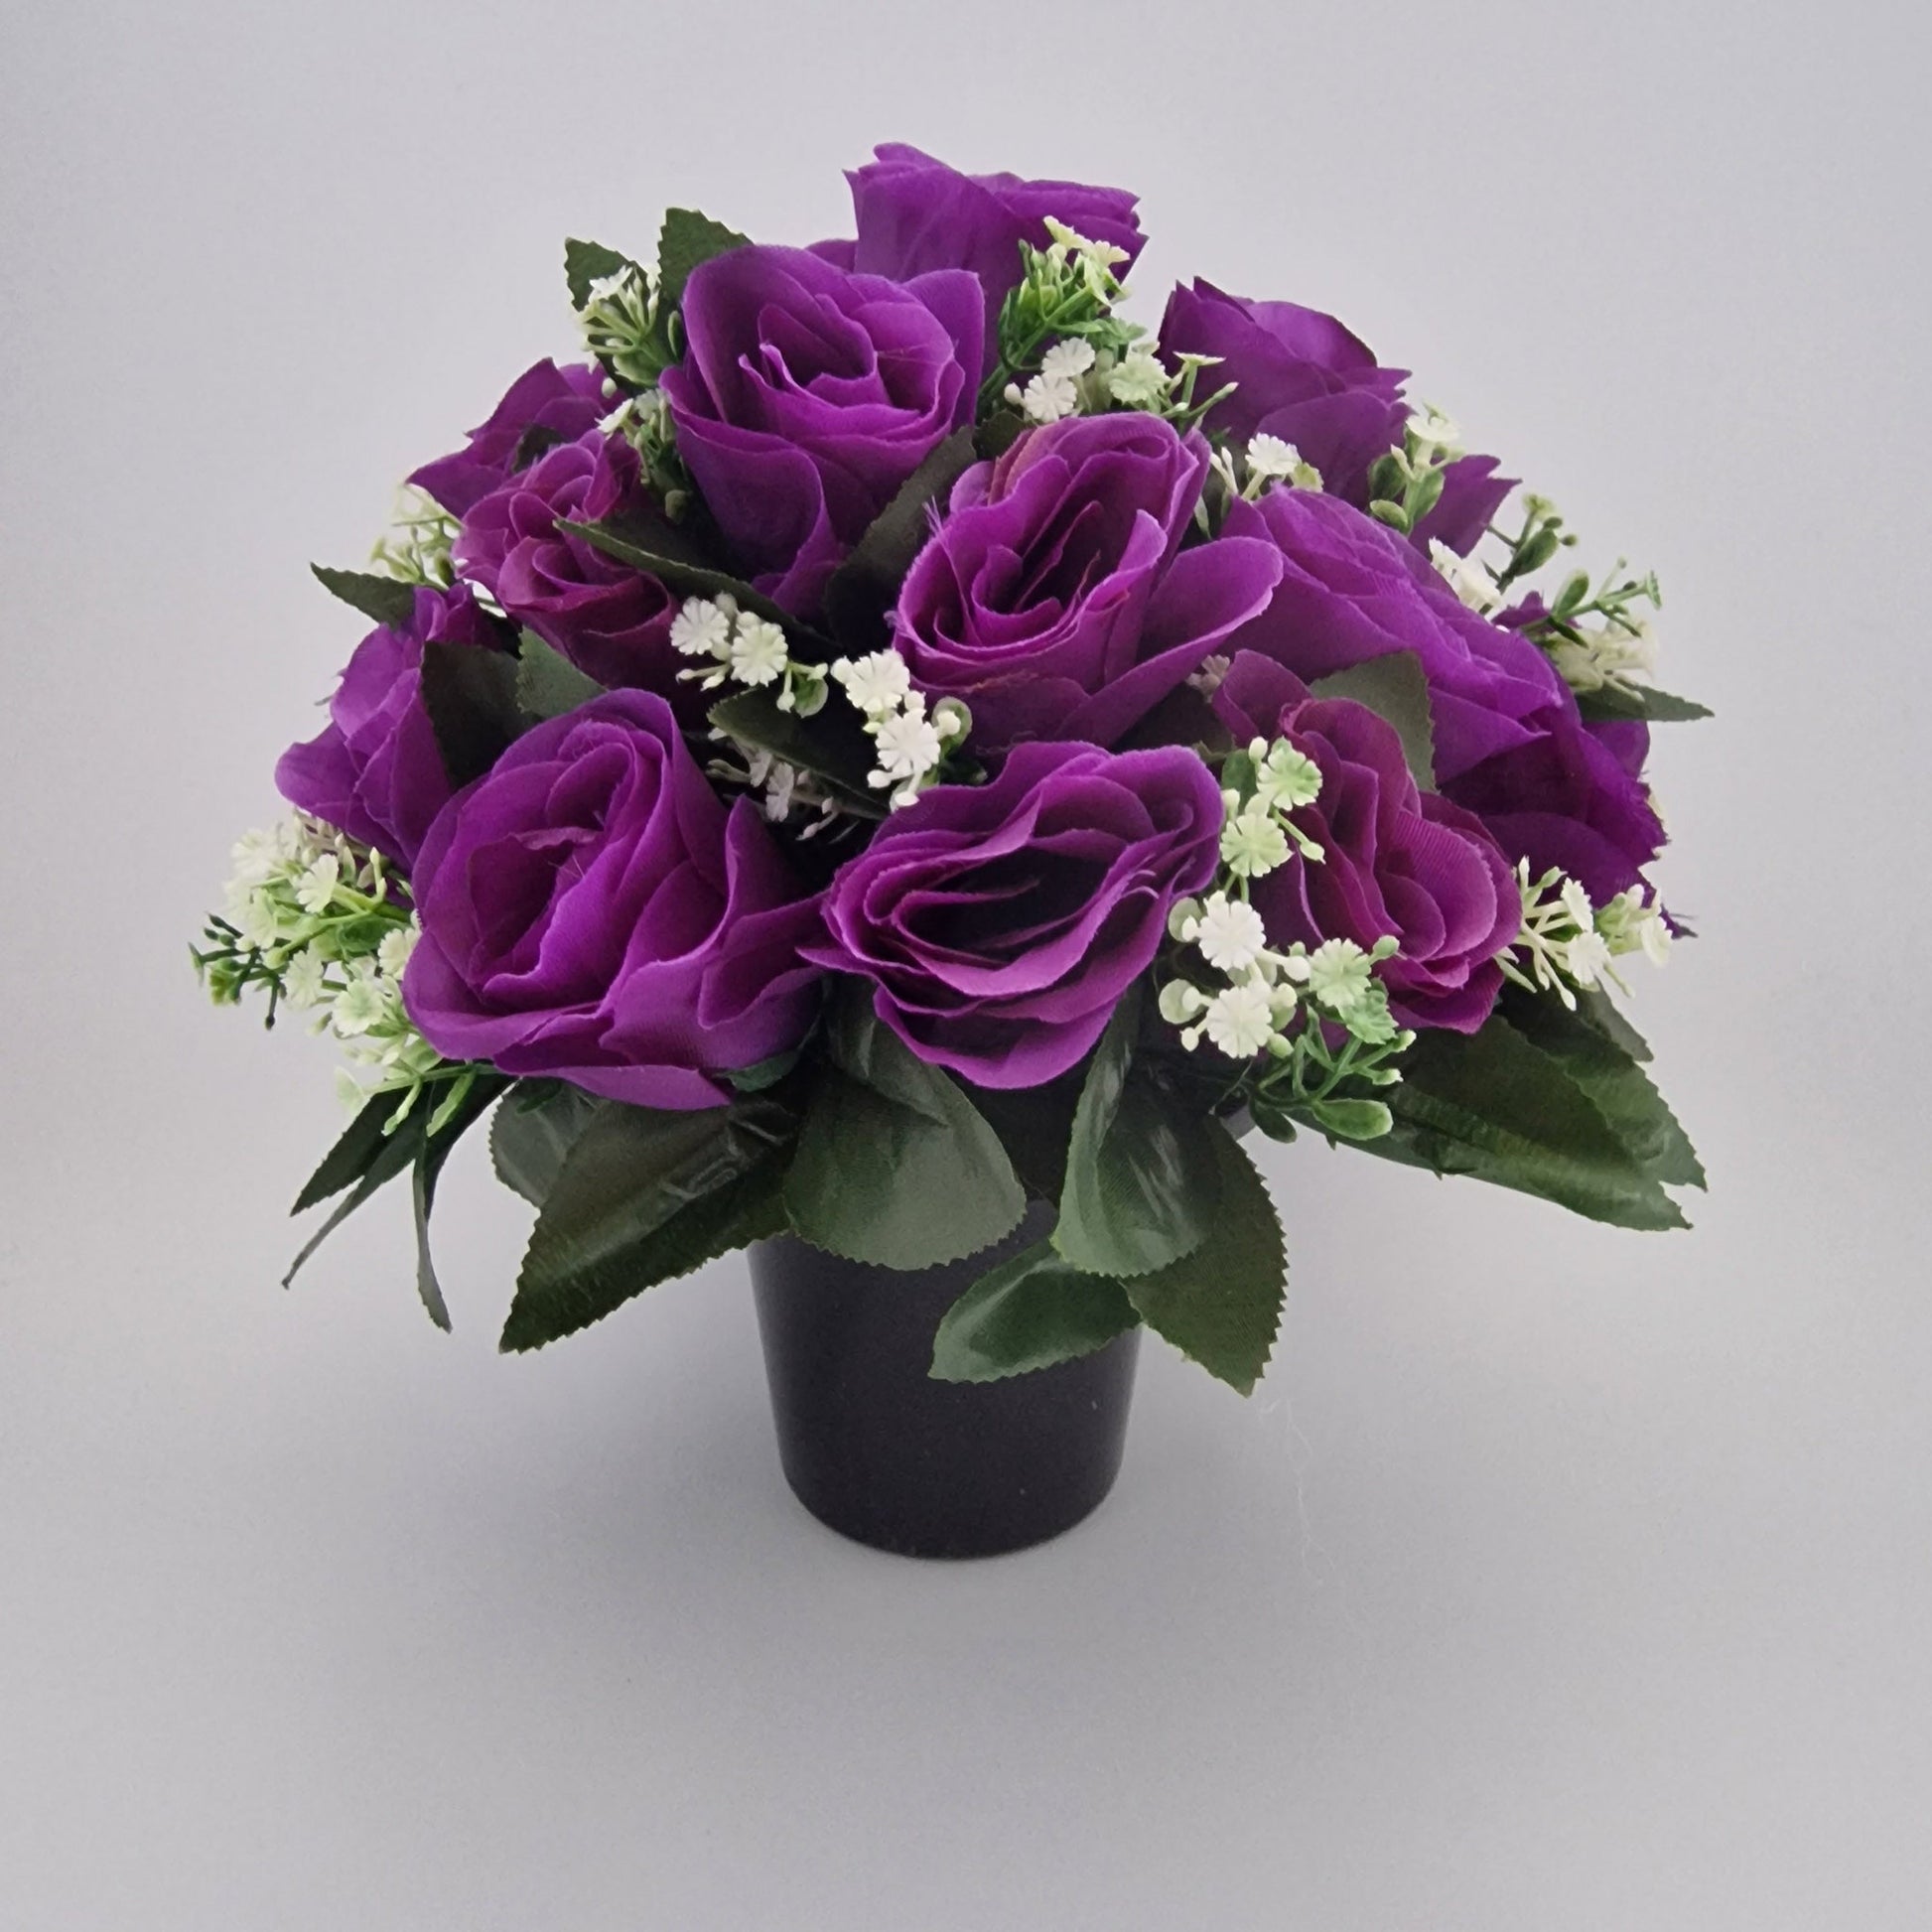 Artificial Silk flower Grave Arrangement in Memorial Crem pot - 24 Purple Rose Heads - Amor Flowers